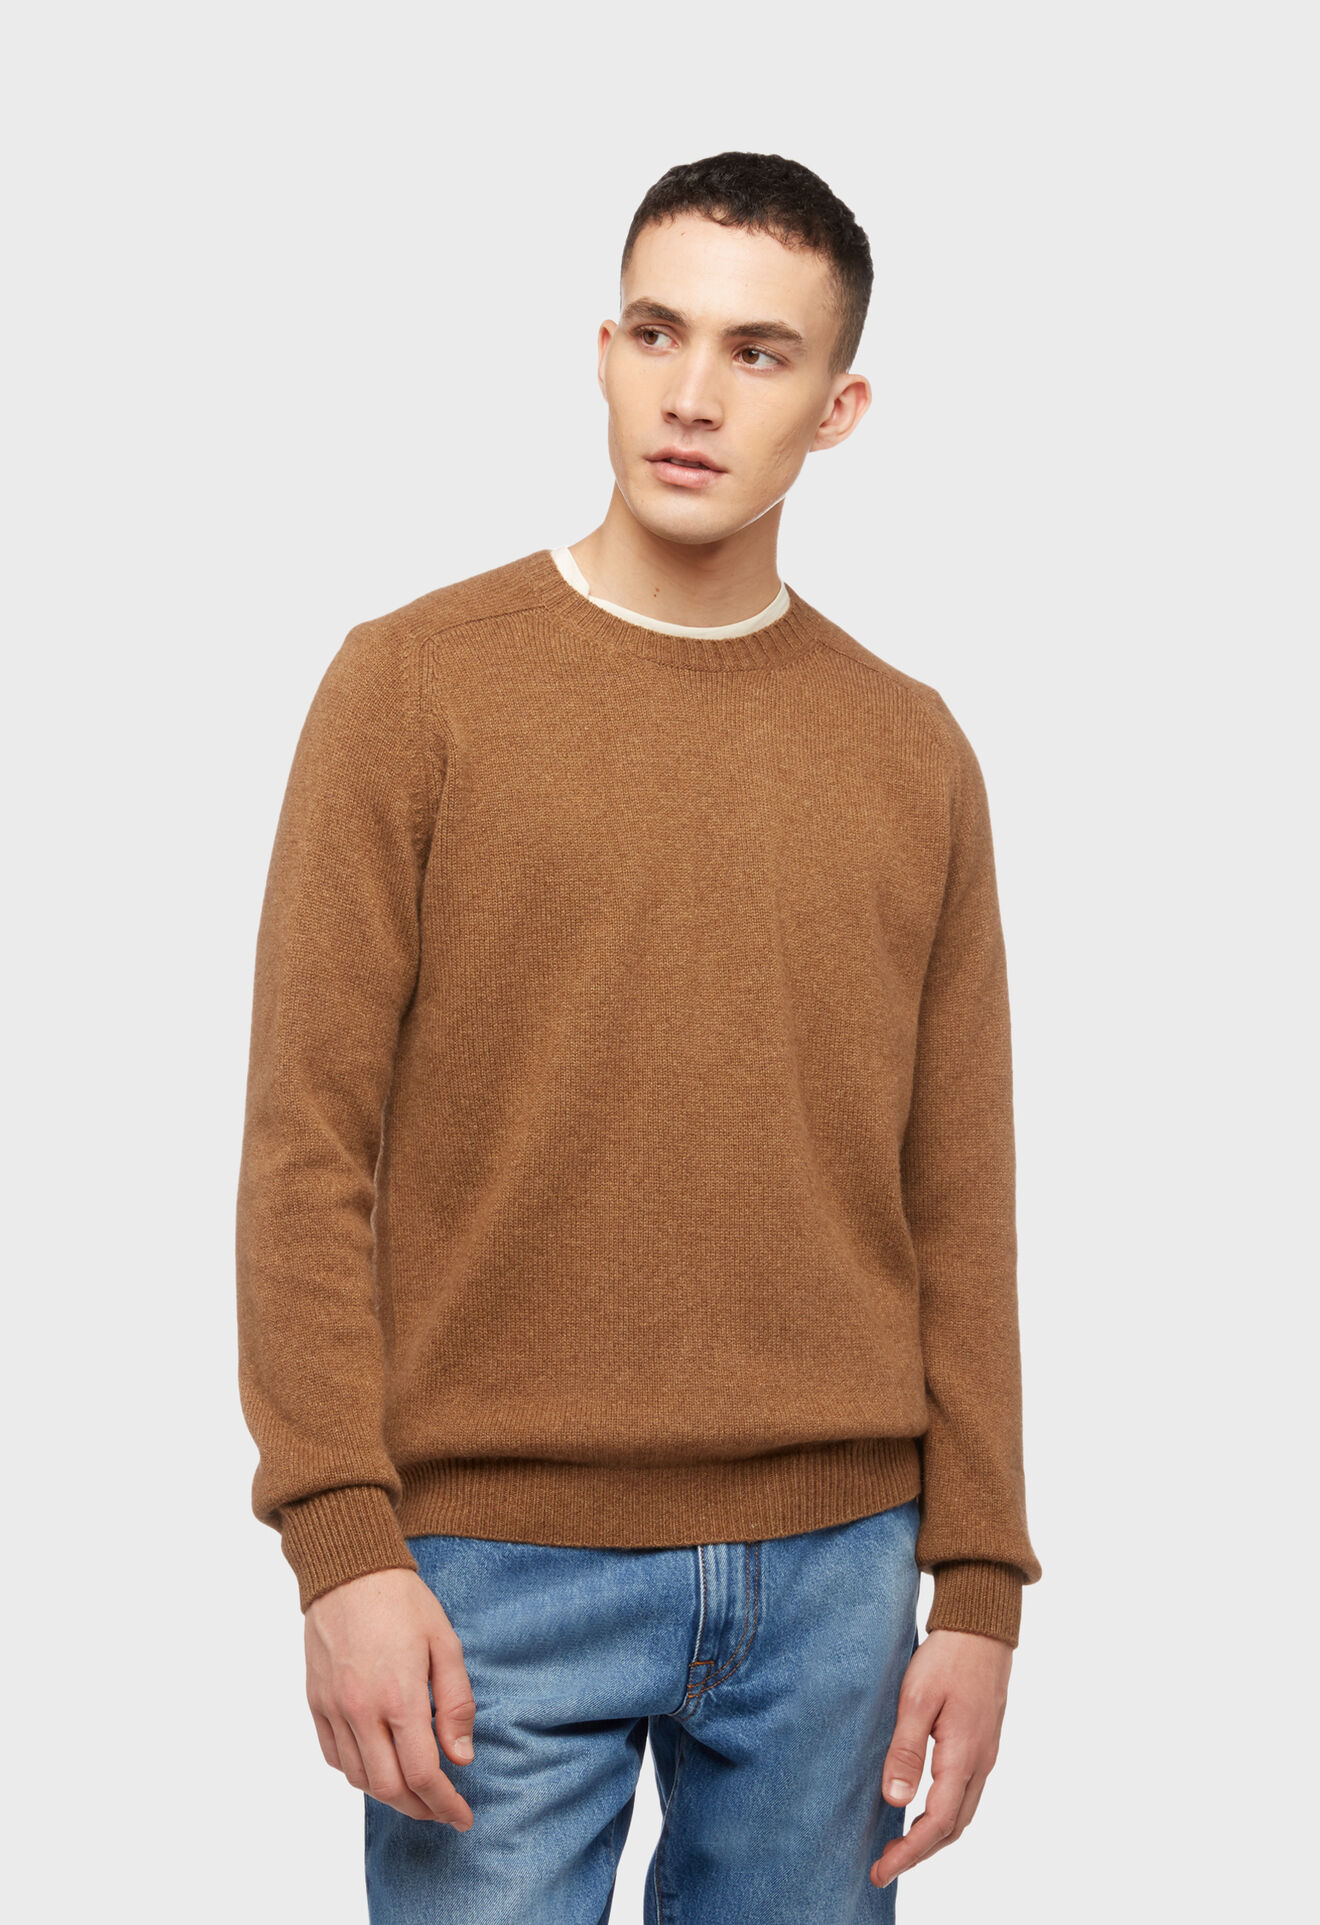 Pure cashmere crewneck sweater in Brown: Luxury Italian Knitwear